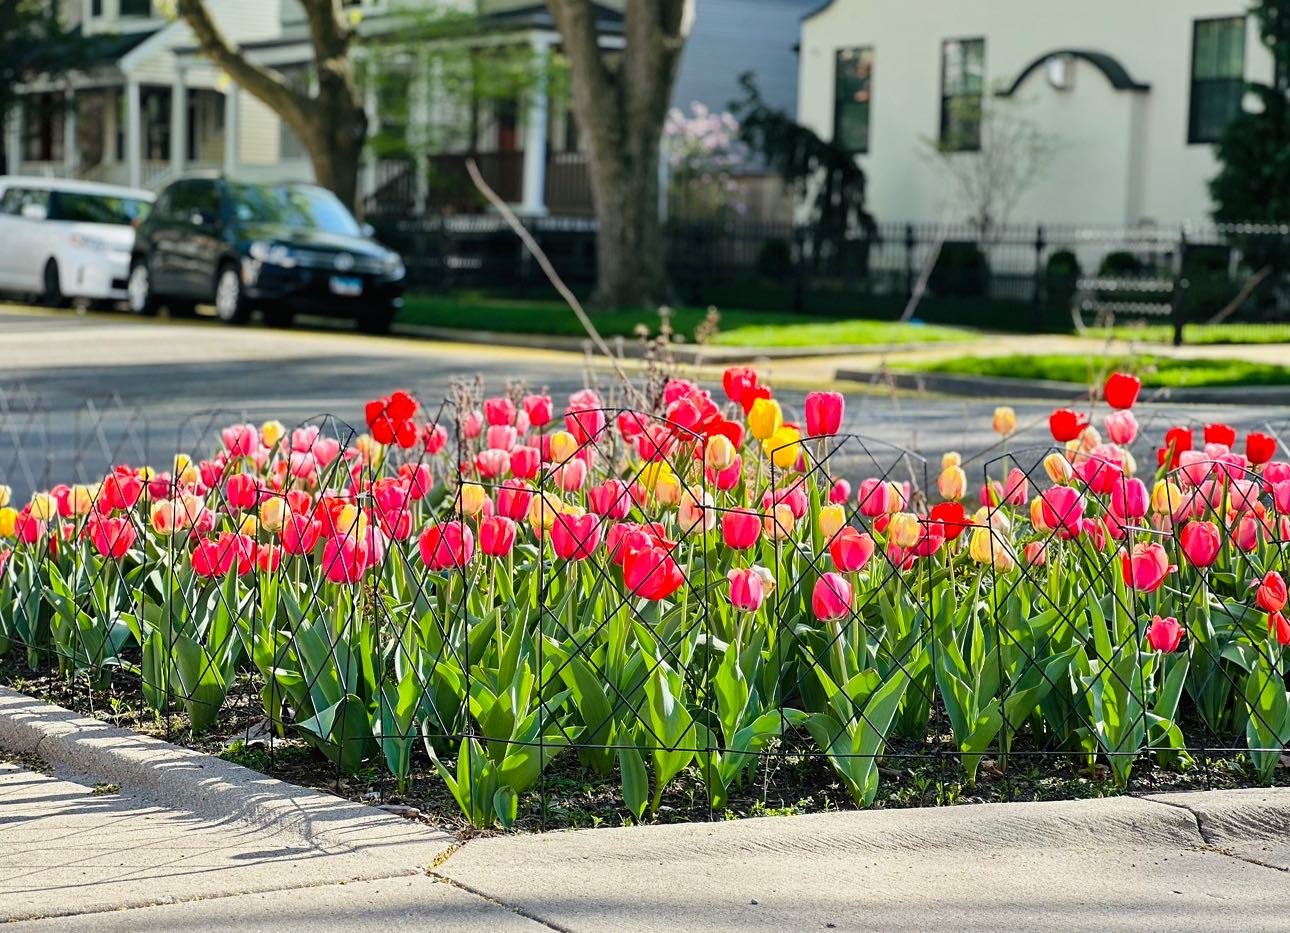 Tulips.

#tulips #spring #bulbs #color #mixedtulips